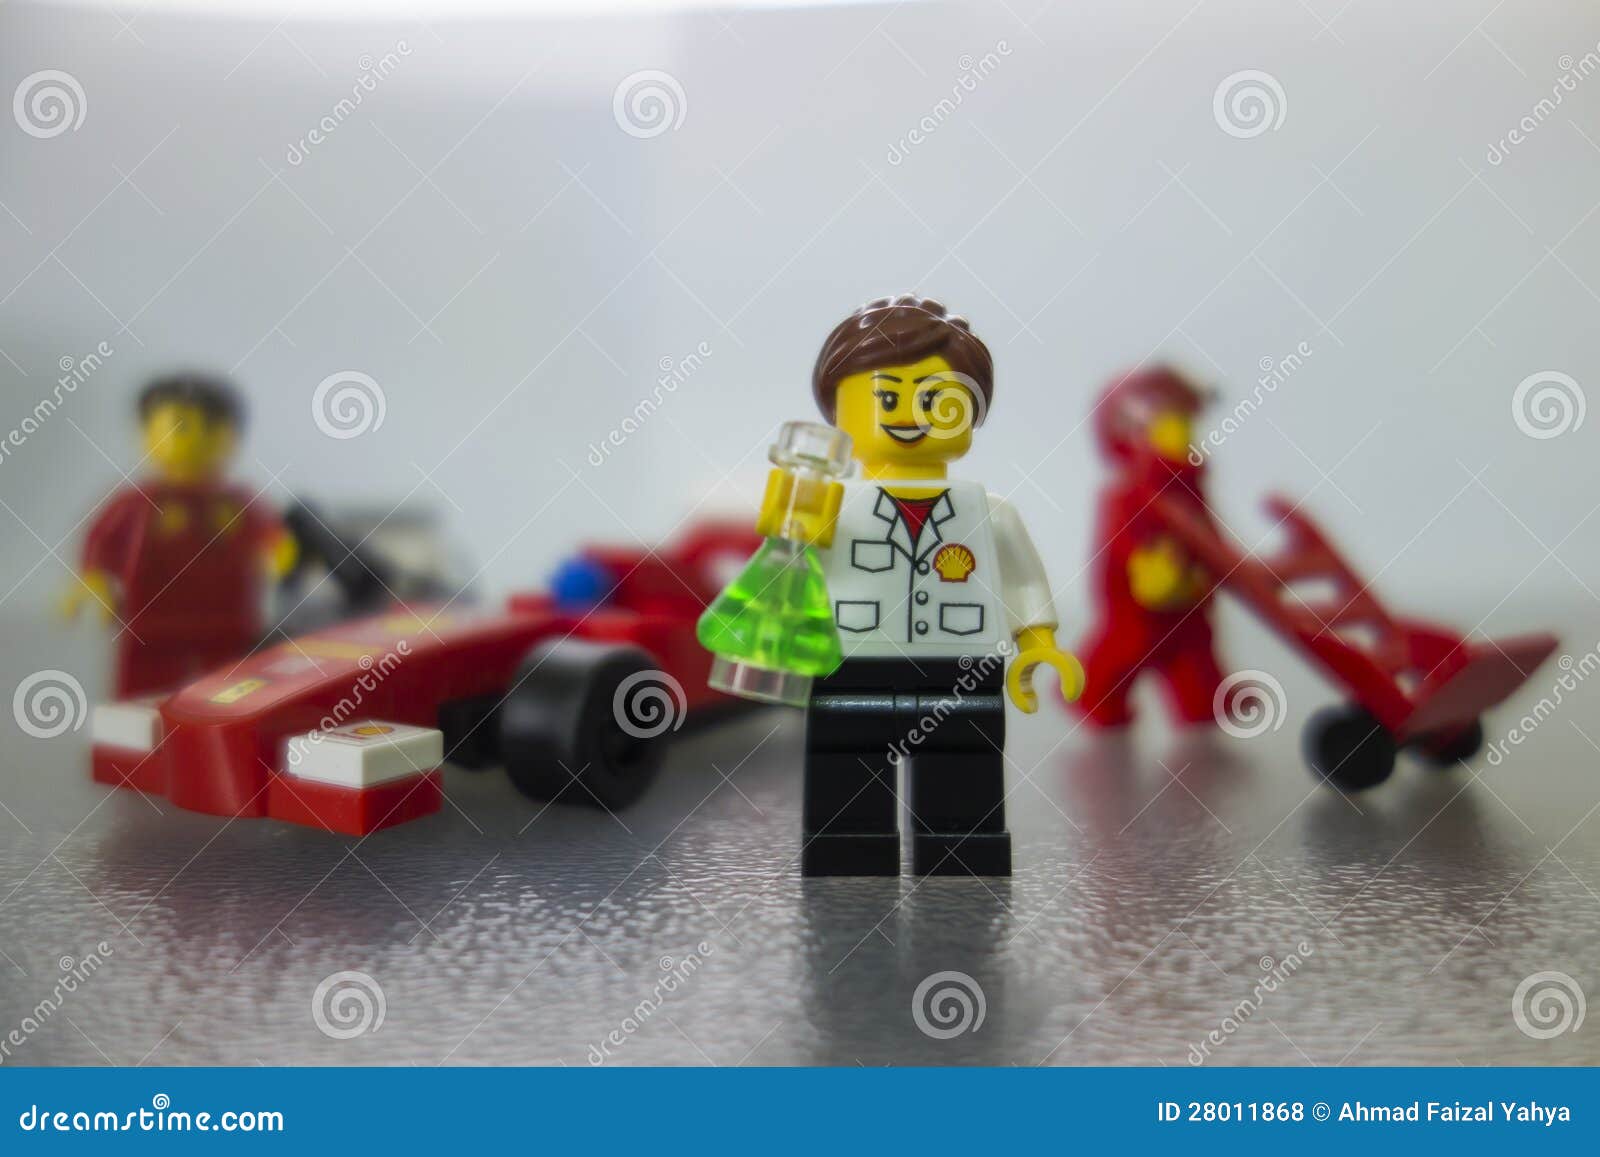 Shell Ferrari Lego toys editorial stock photo. Image of close - 28011868